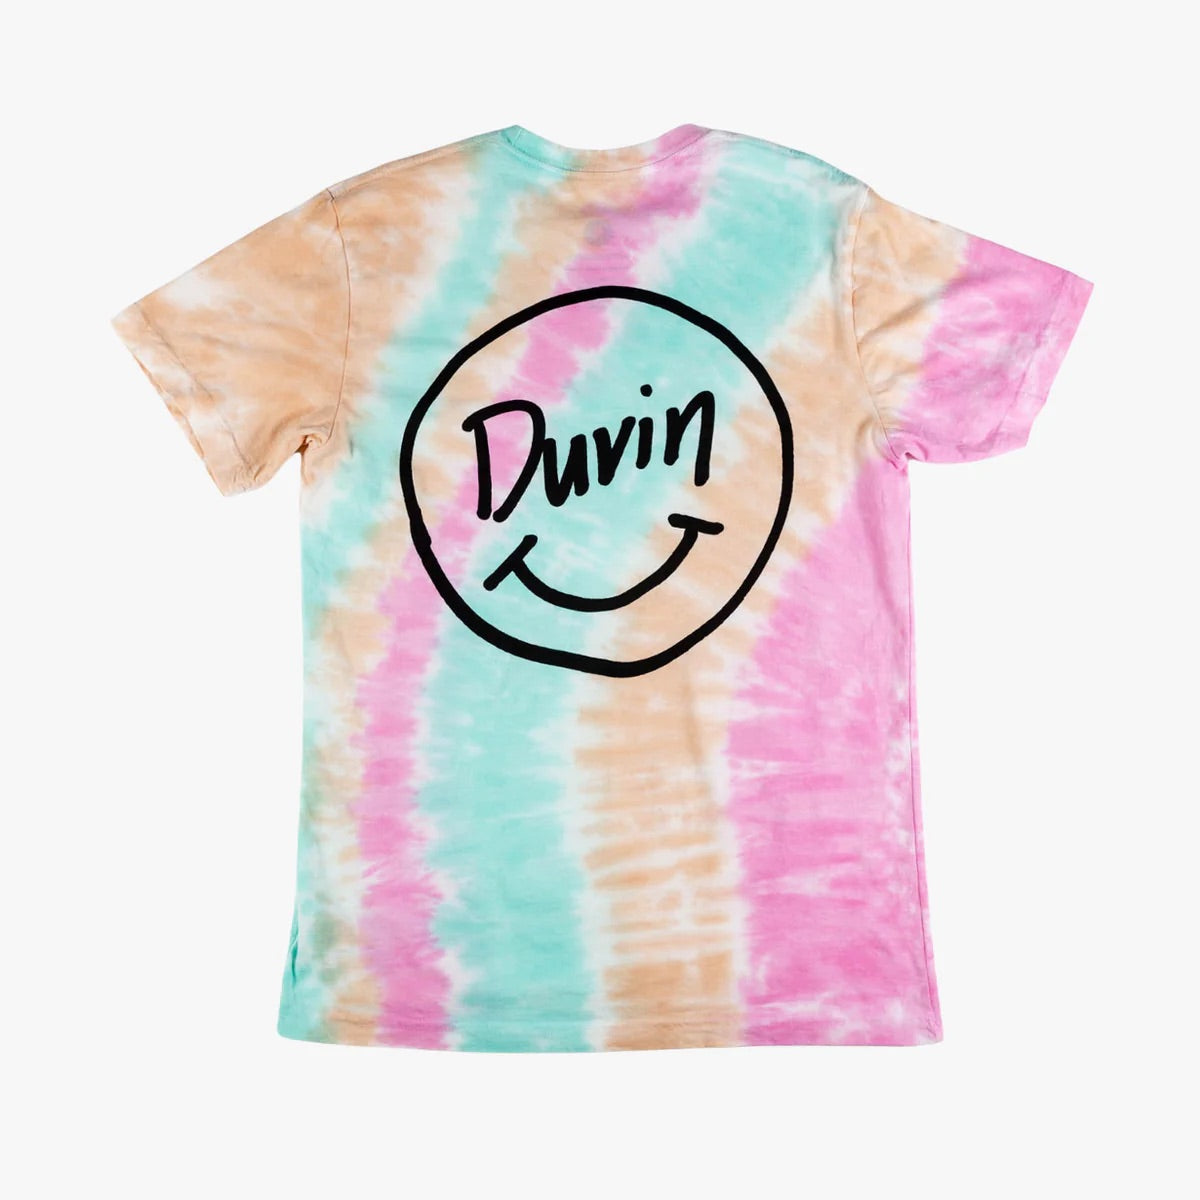 Duvin / Smile Tee Dye